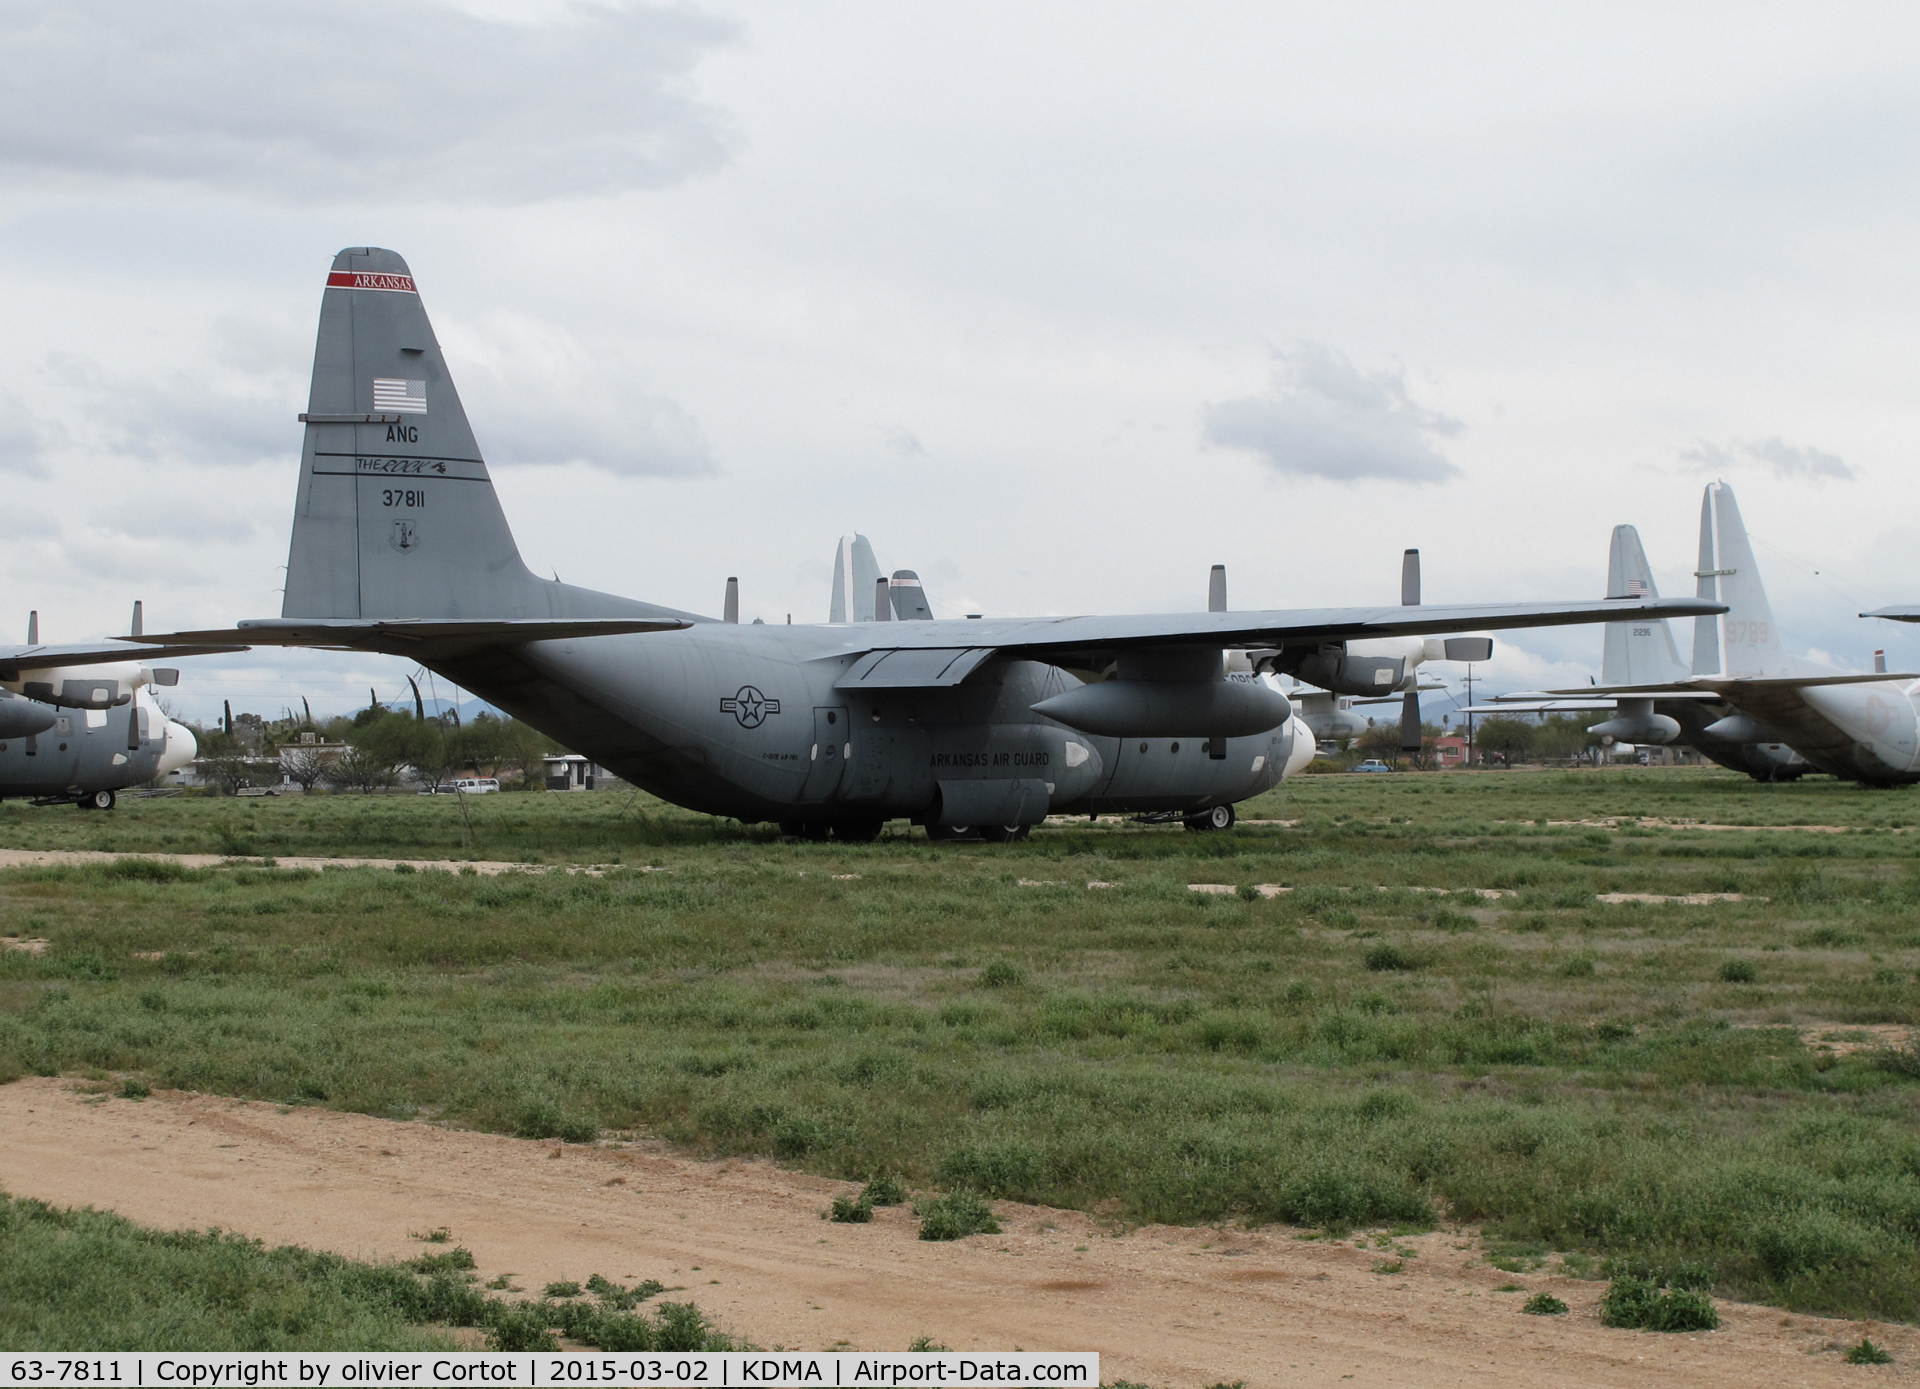 63-7811, Lockheed C-130E Hercules C/N 382-3881, AMARG storage